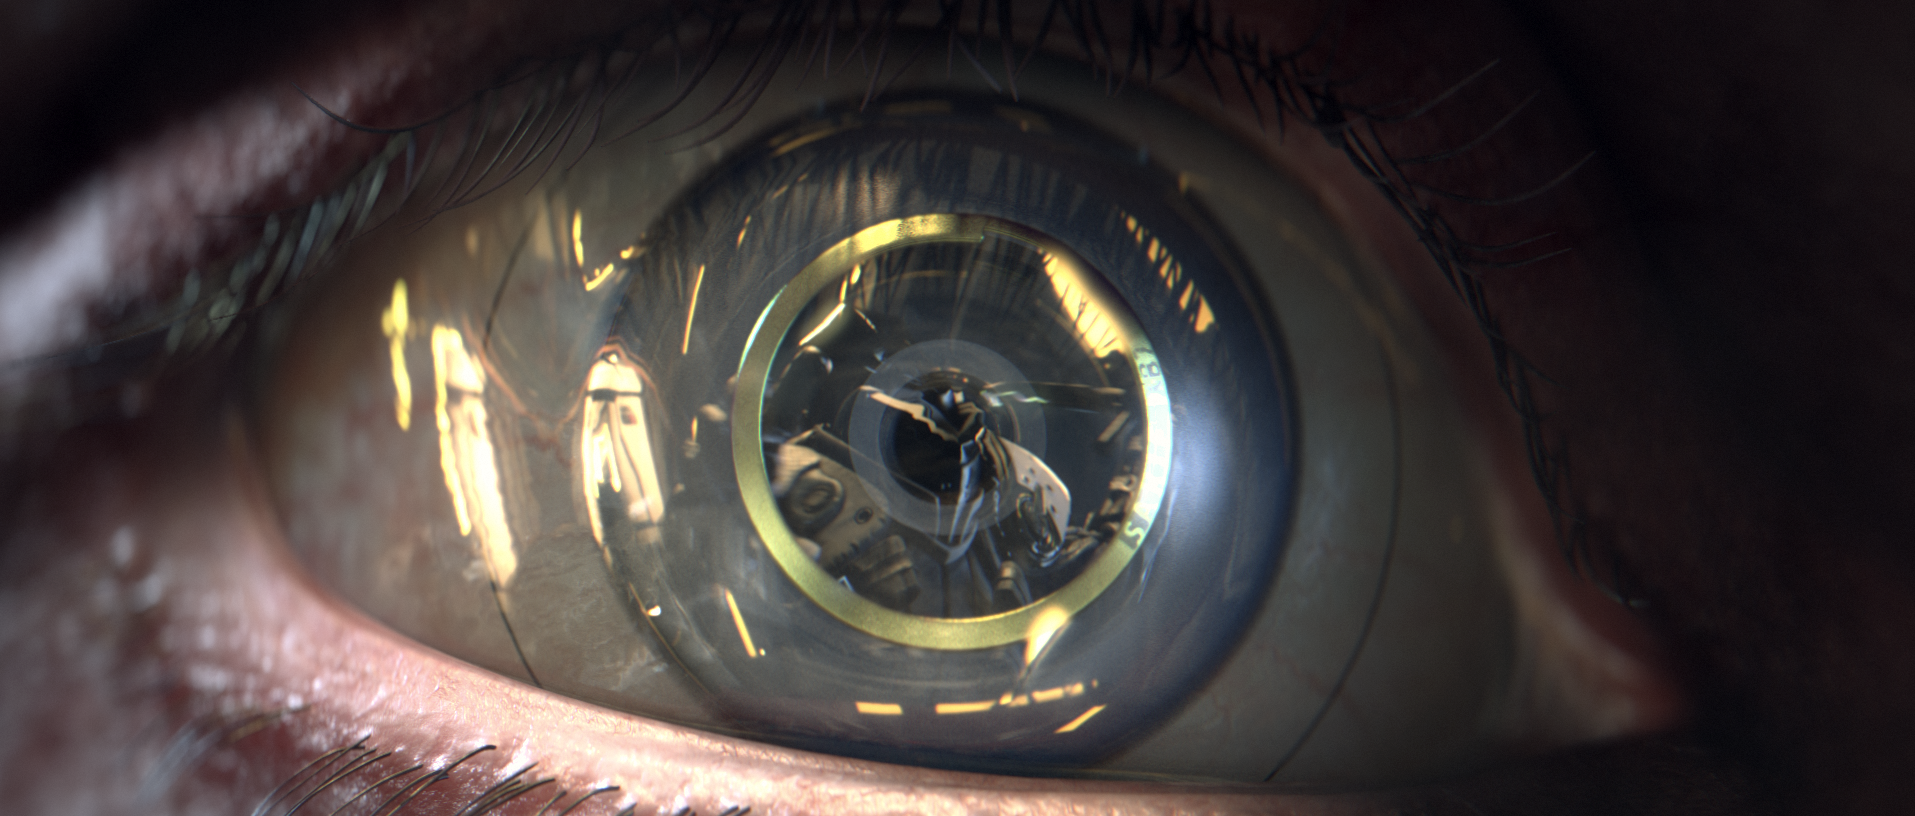 Deus Ex Mankind Divided Screenshot Showing an Artificial Eye Reflecting a Scene